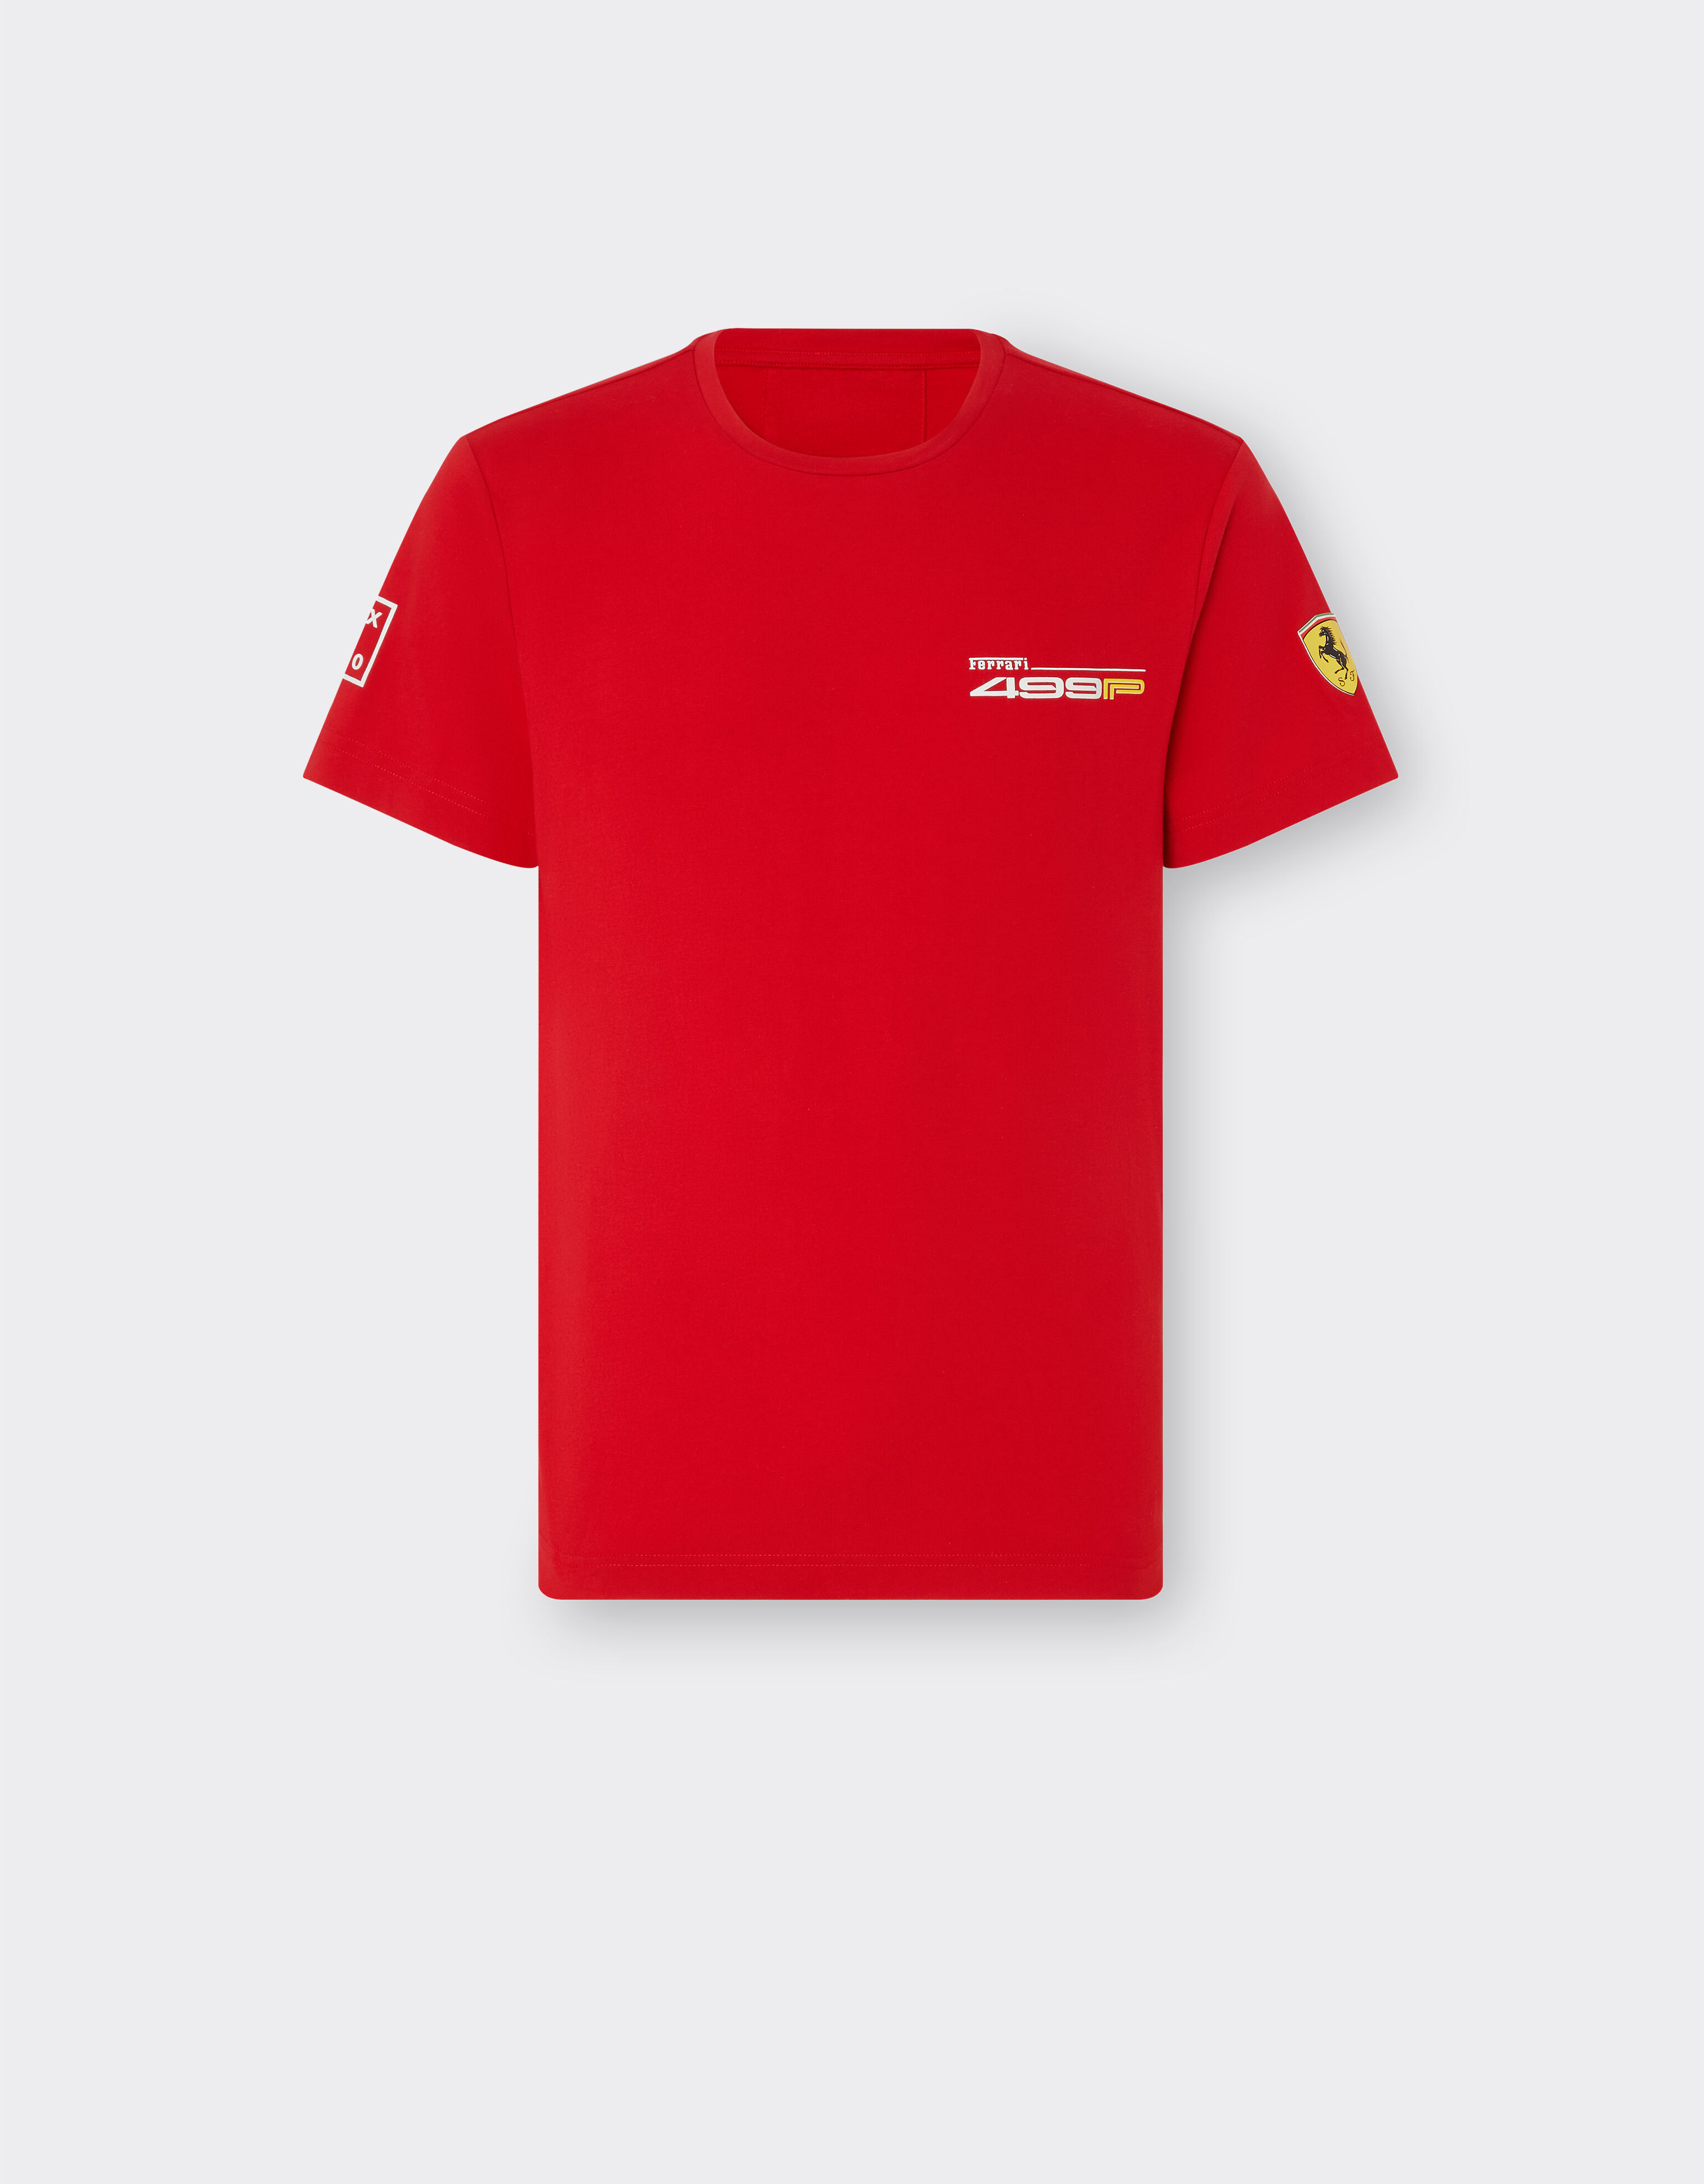 ${brand} Ferrari Hypercar 499P T-Shirt ${colorDescription} ${masterID}